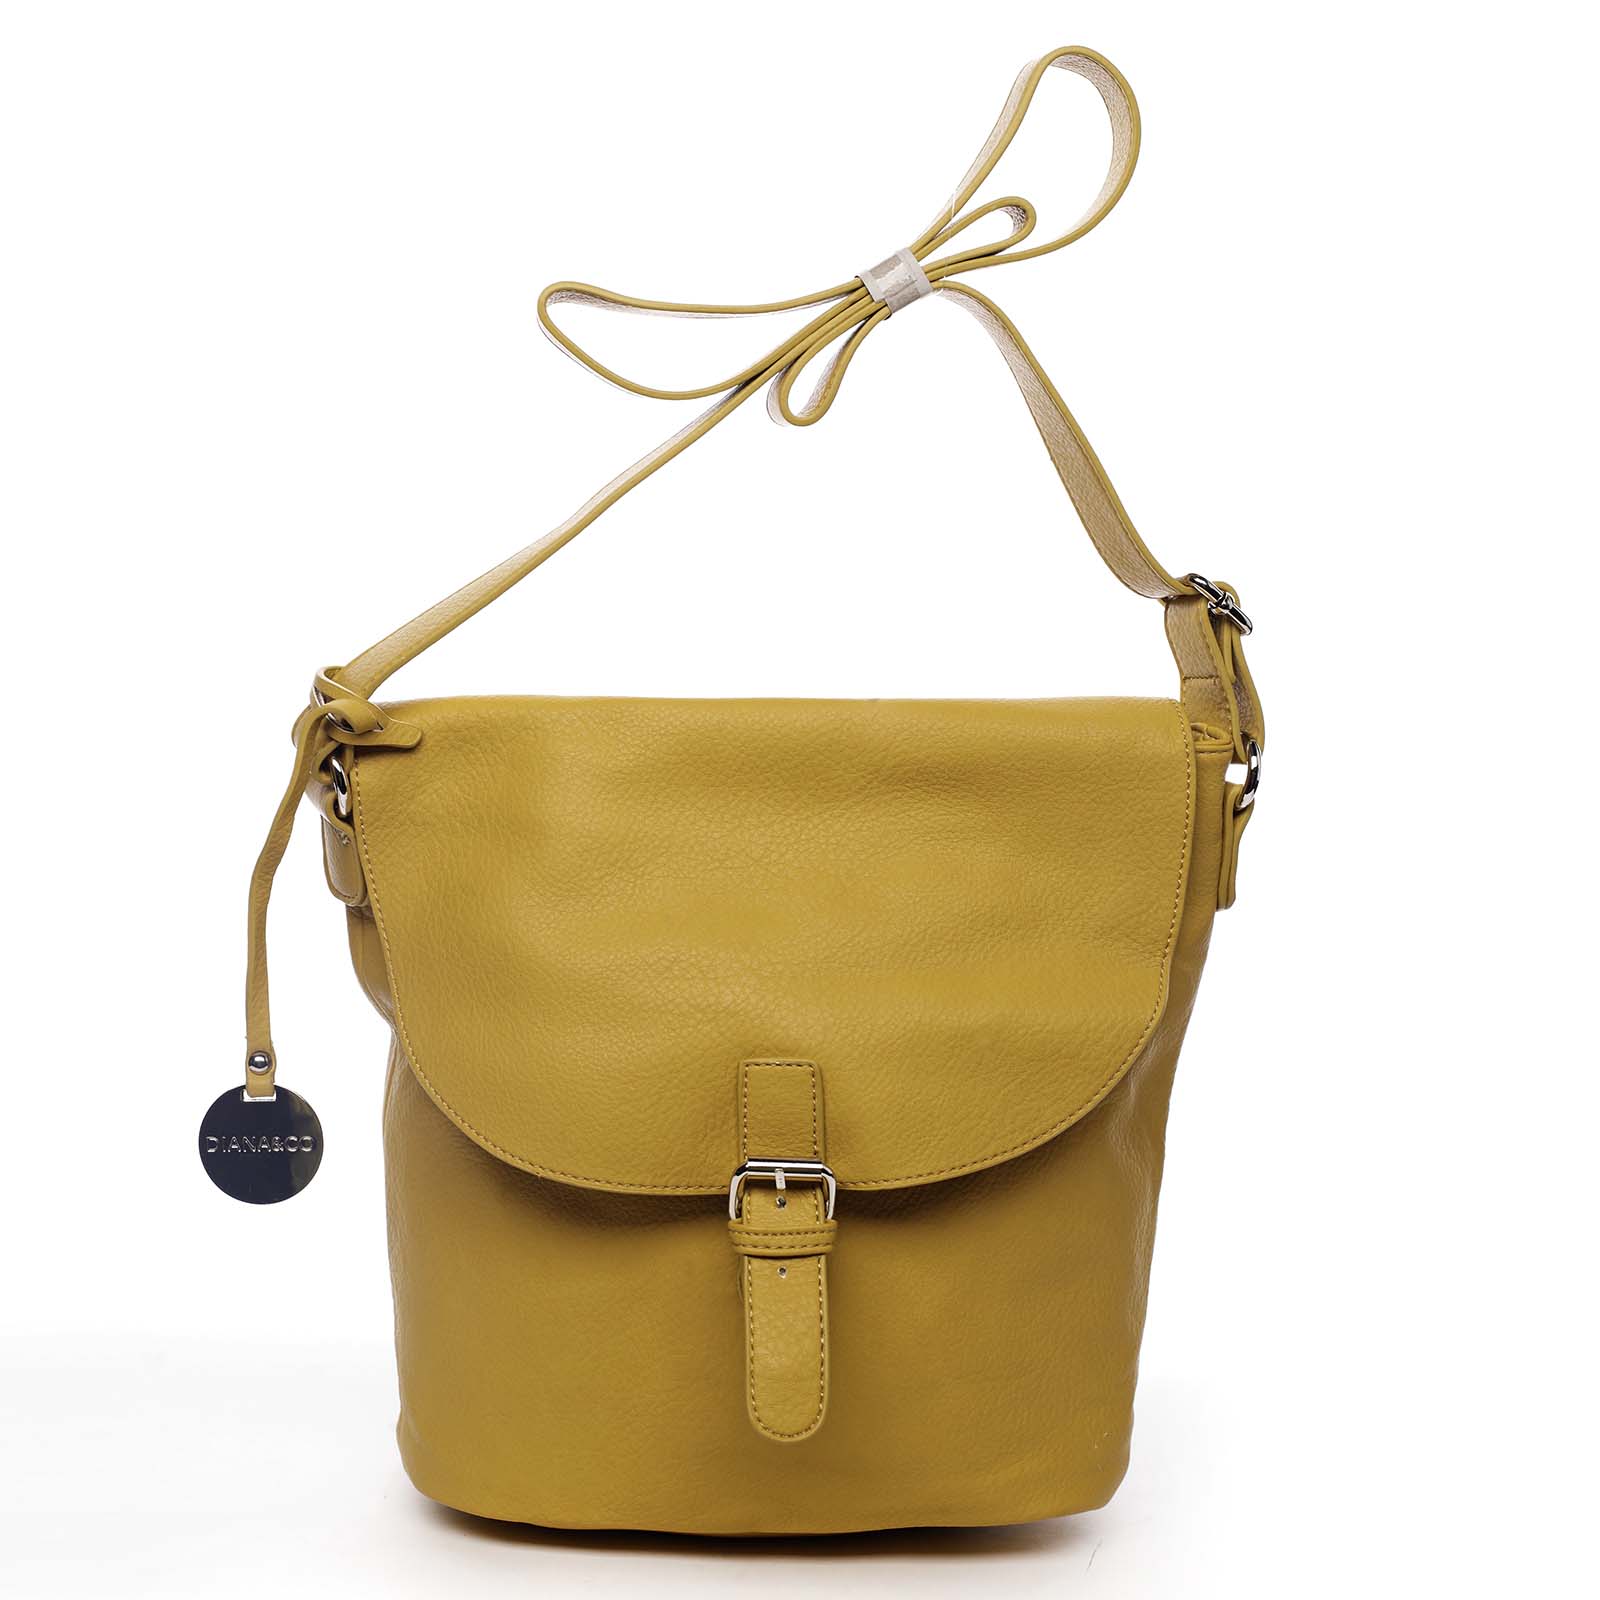 Dámská kabelka přes rameno žlutá - DIANA & CO Leilla žlutá